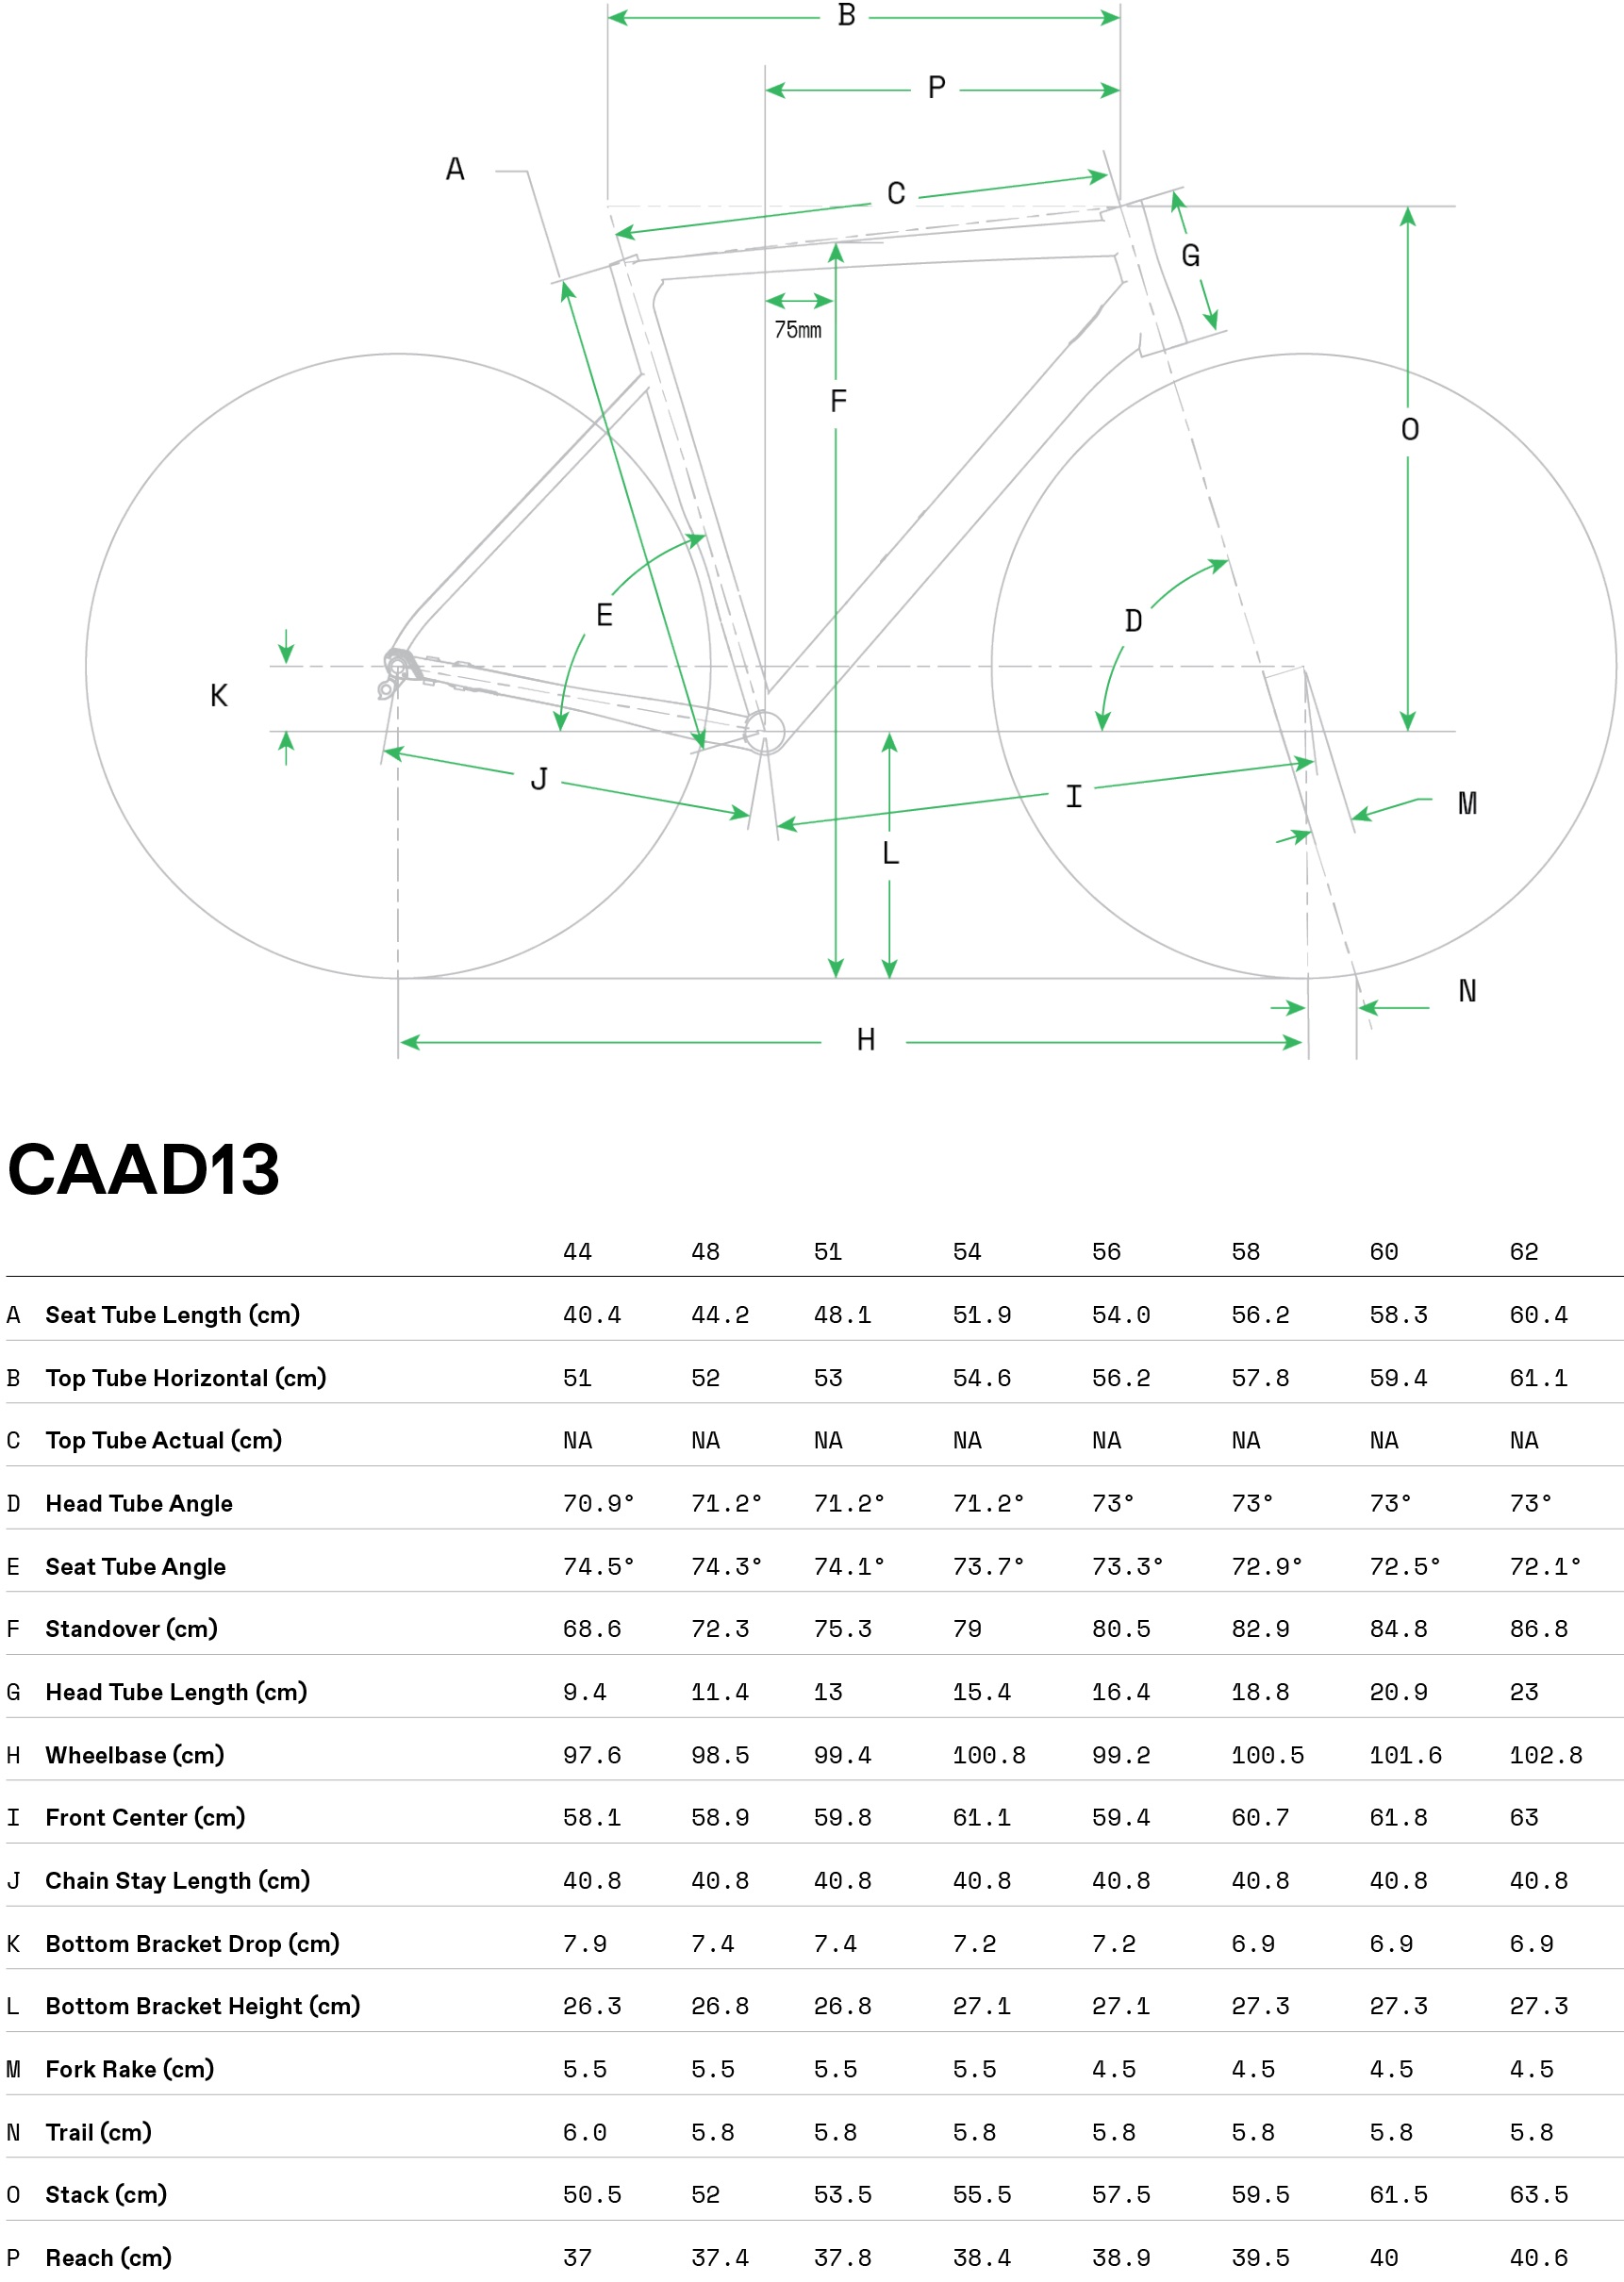 Geometria roweru Cannondale CAAD13